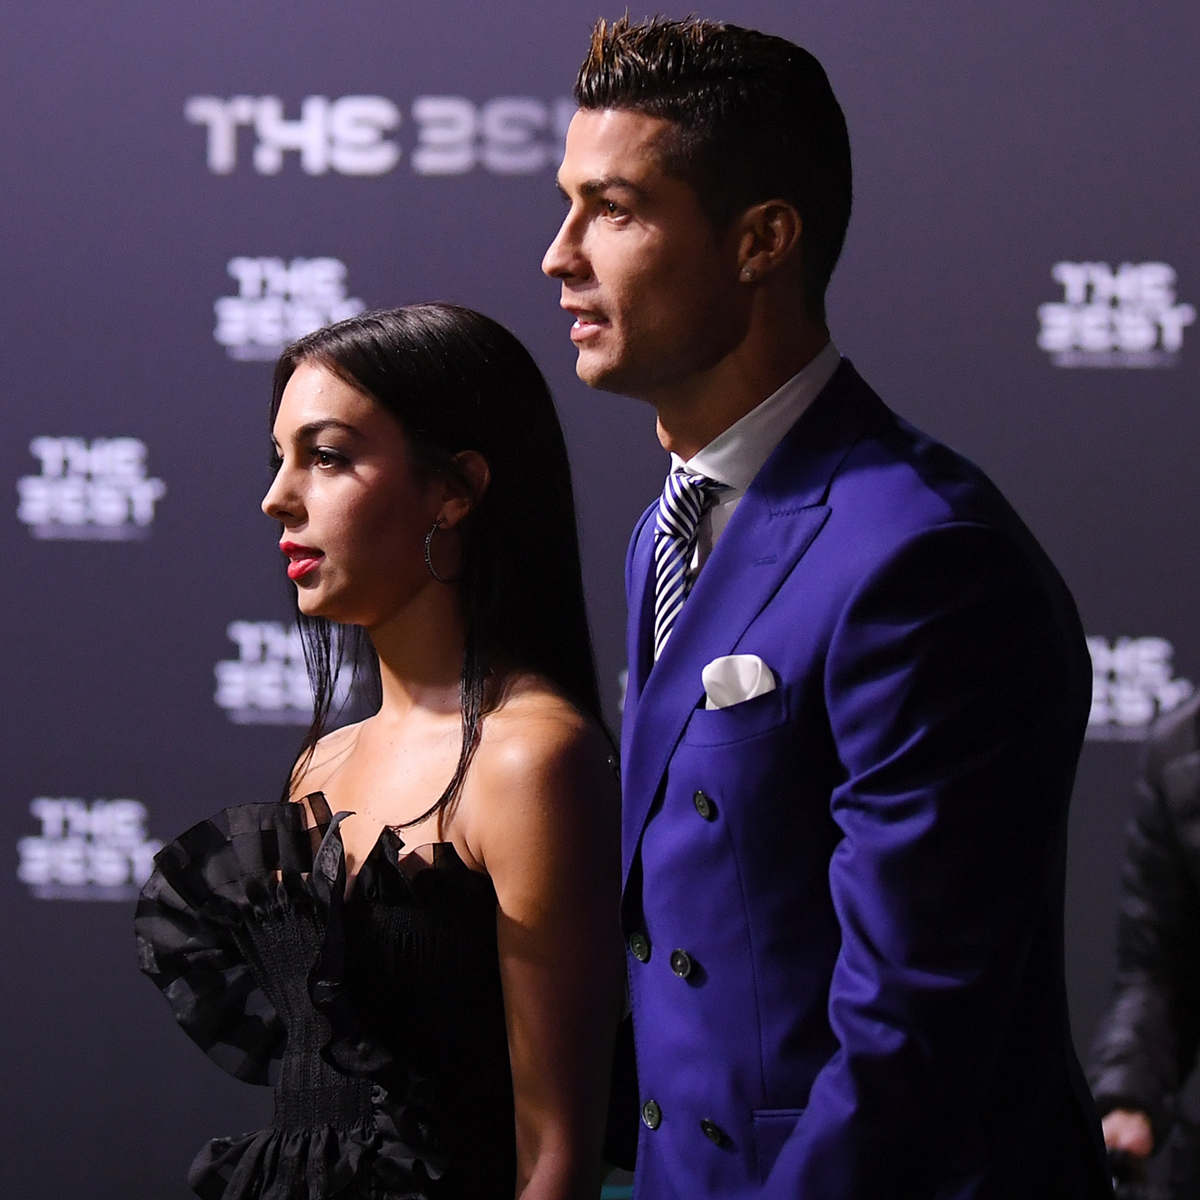 Cristiano Ronaldo and Georgina Rodriguez look stylish as they